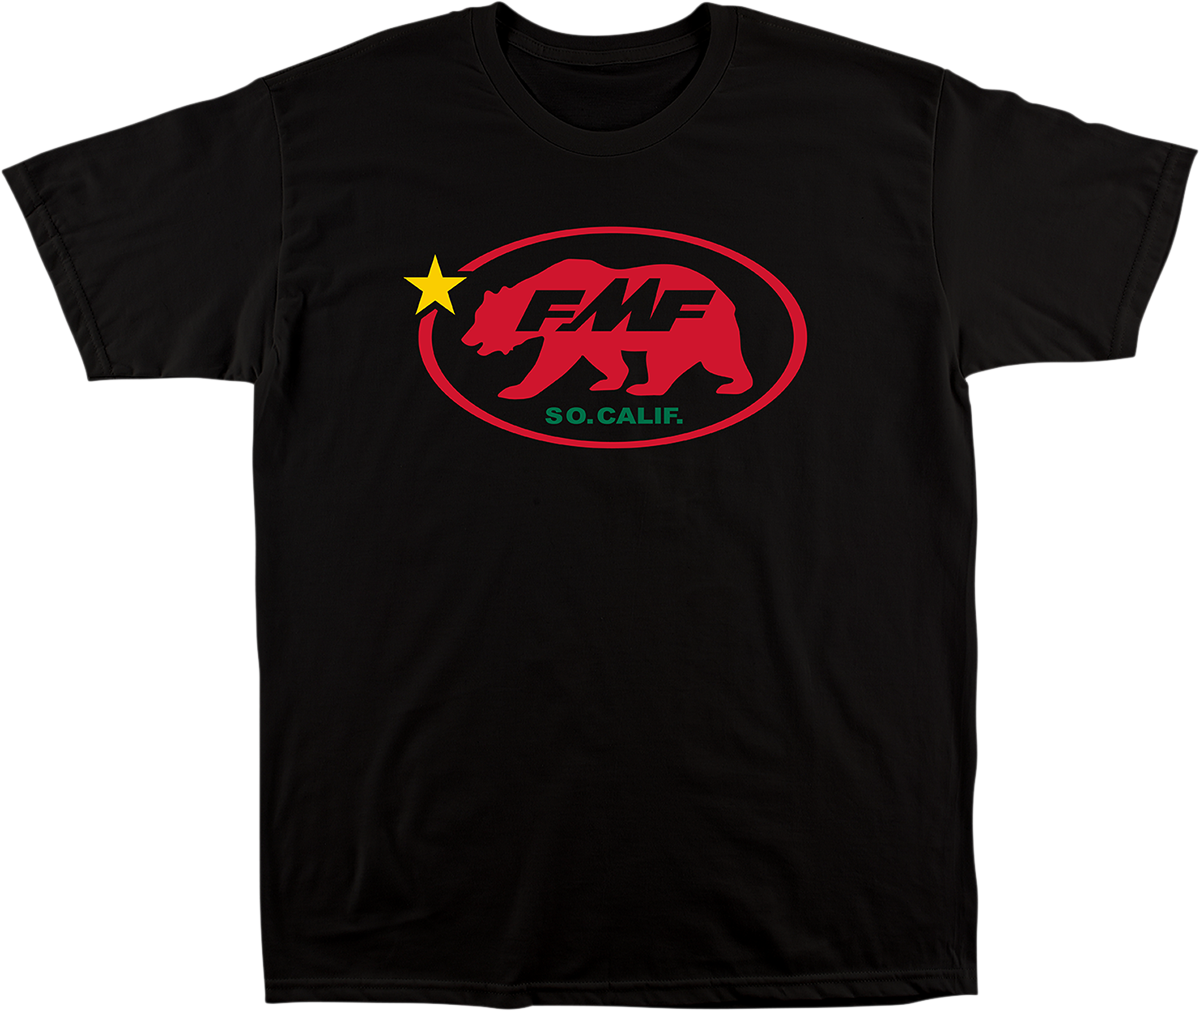 FMF Republic of Exhaust T-Shirt - Black - Large SU21118907BKLG 3030-20718